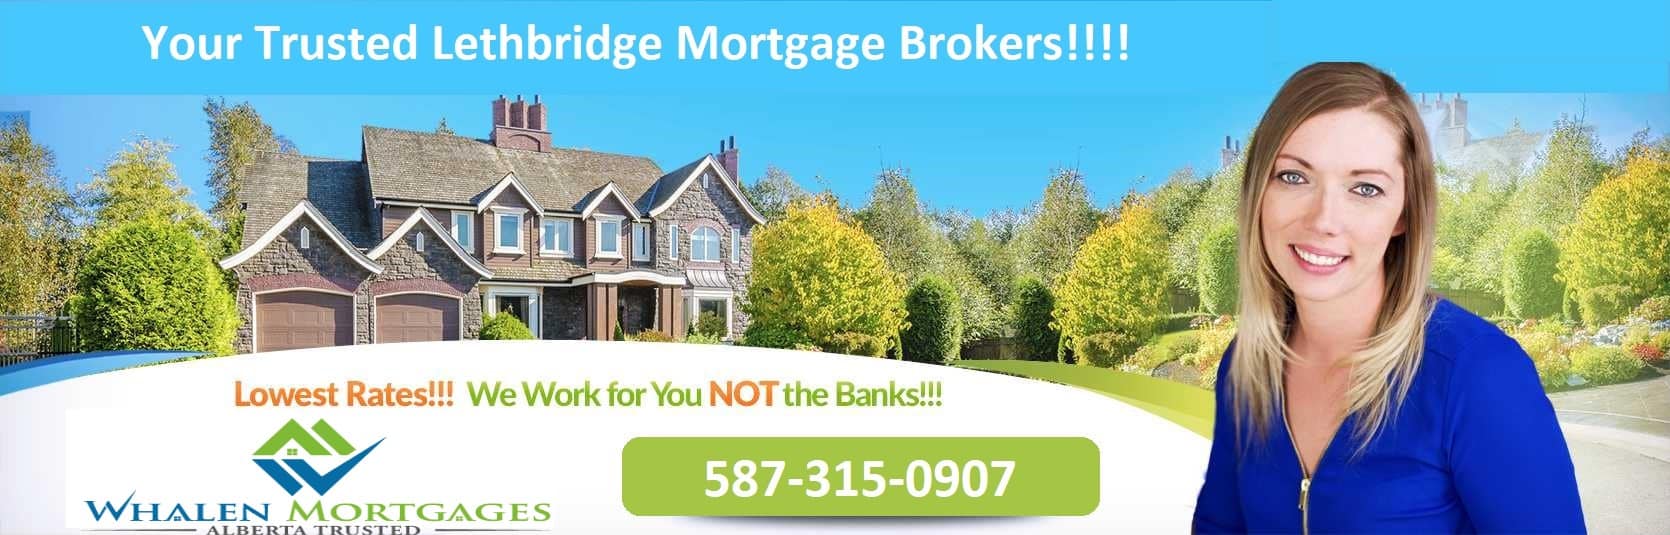 Mortgage Lender Lethbridge First National | Lowest Mortgage Rates 